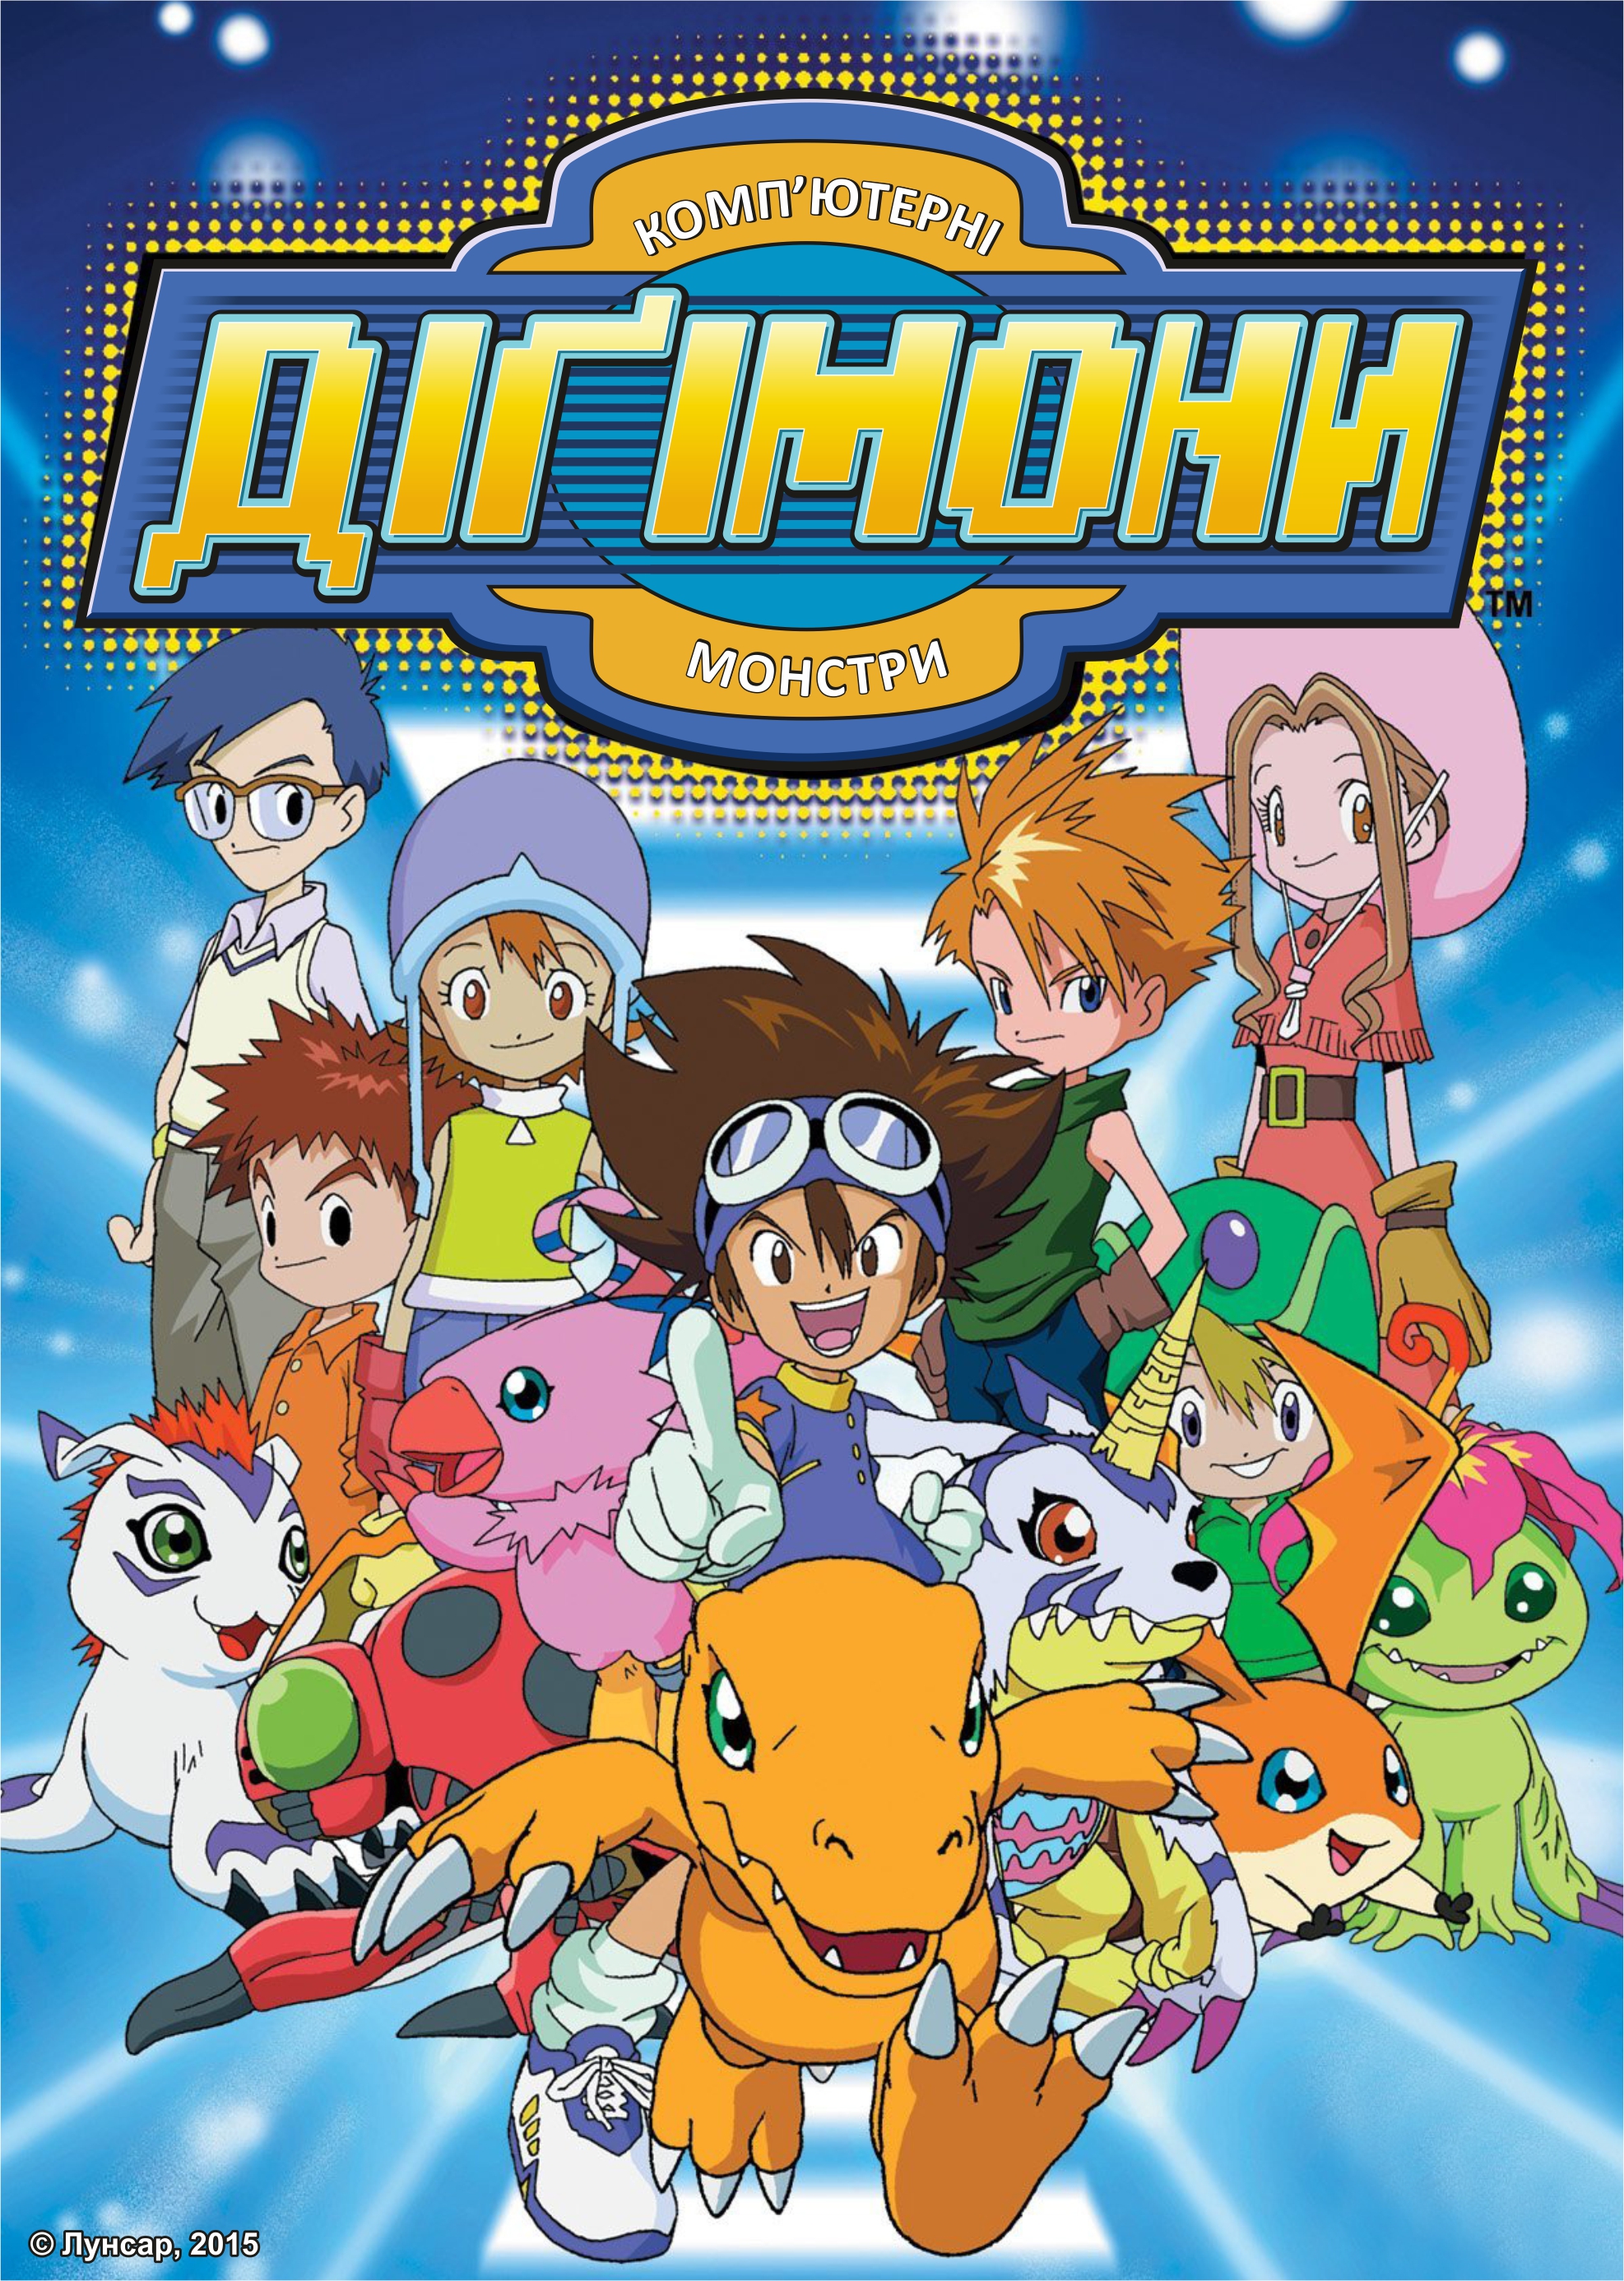 Download Digimon Movies Sub Indo